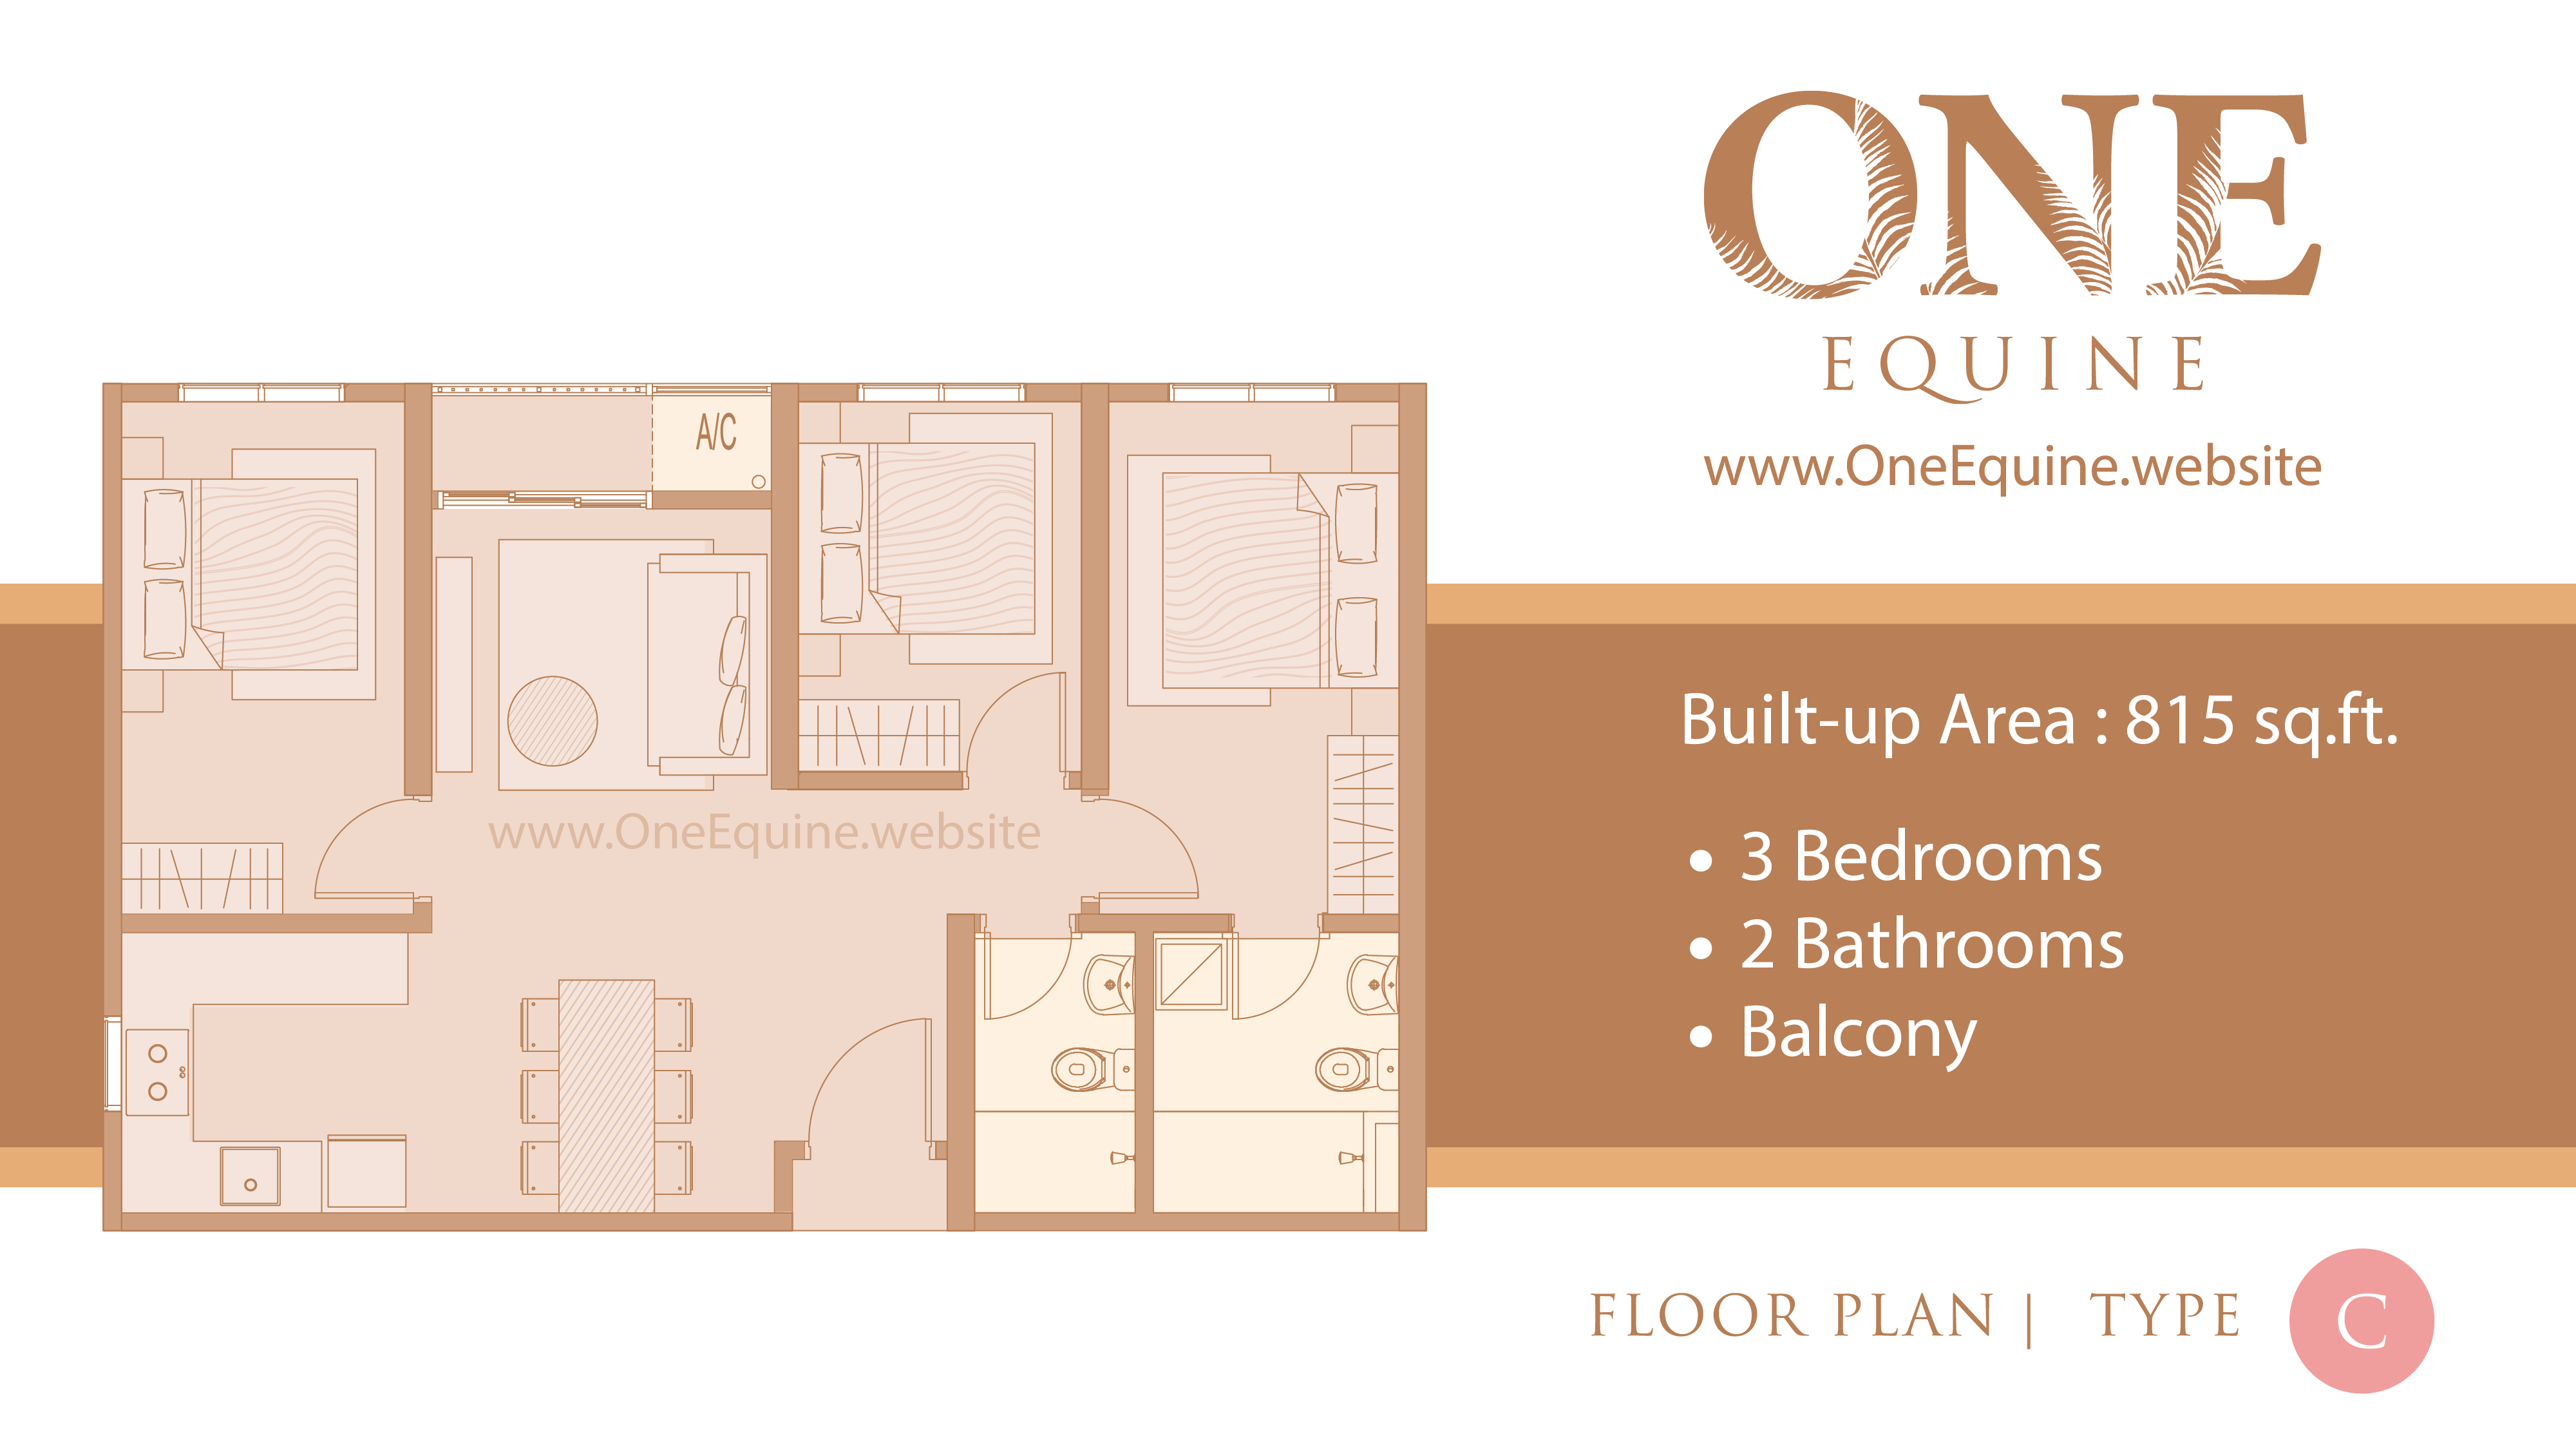 One Equine Park Seri Kembangan - Serviced Apartment 3 Bedrooms 2 Bathrooms Balcony - Floor Plan Type C - 815 sqft